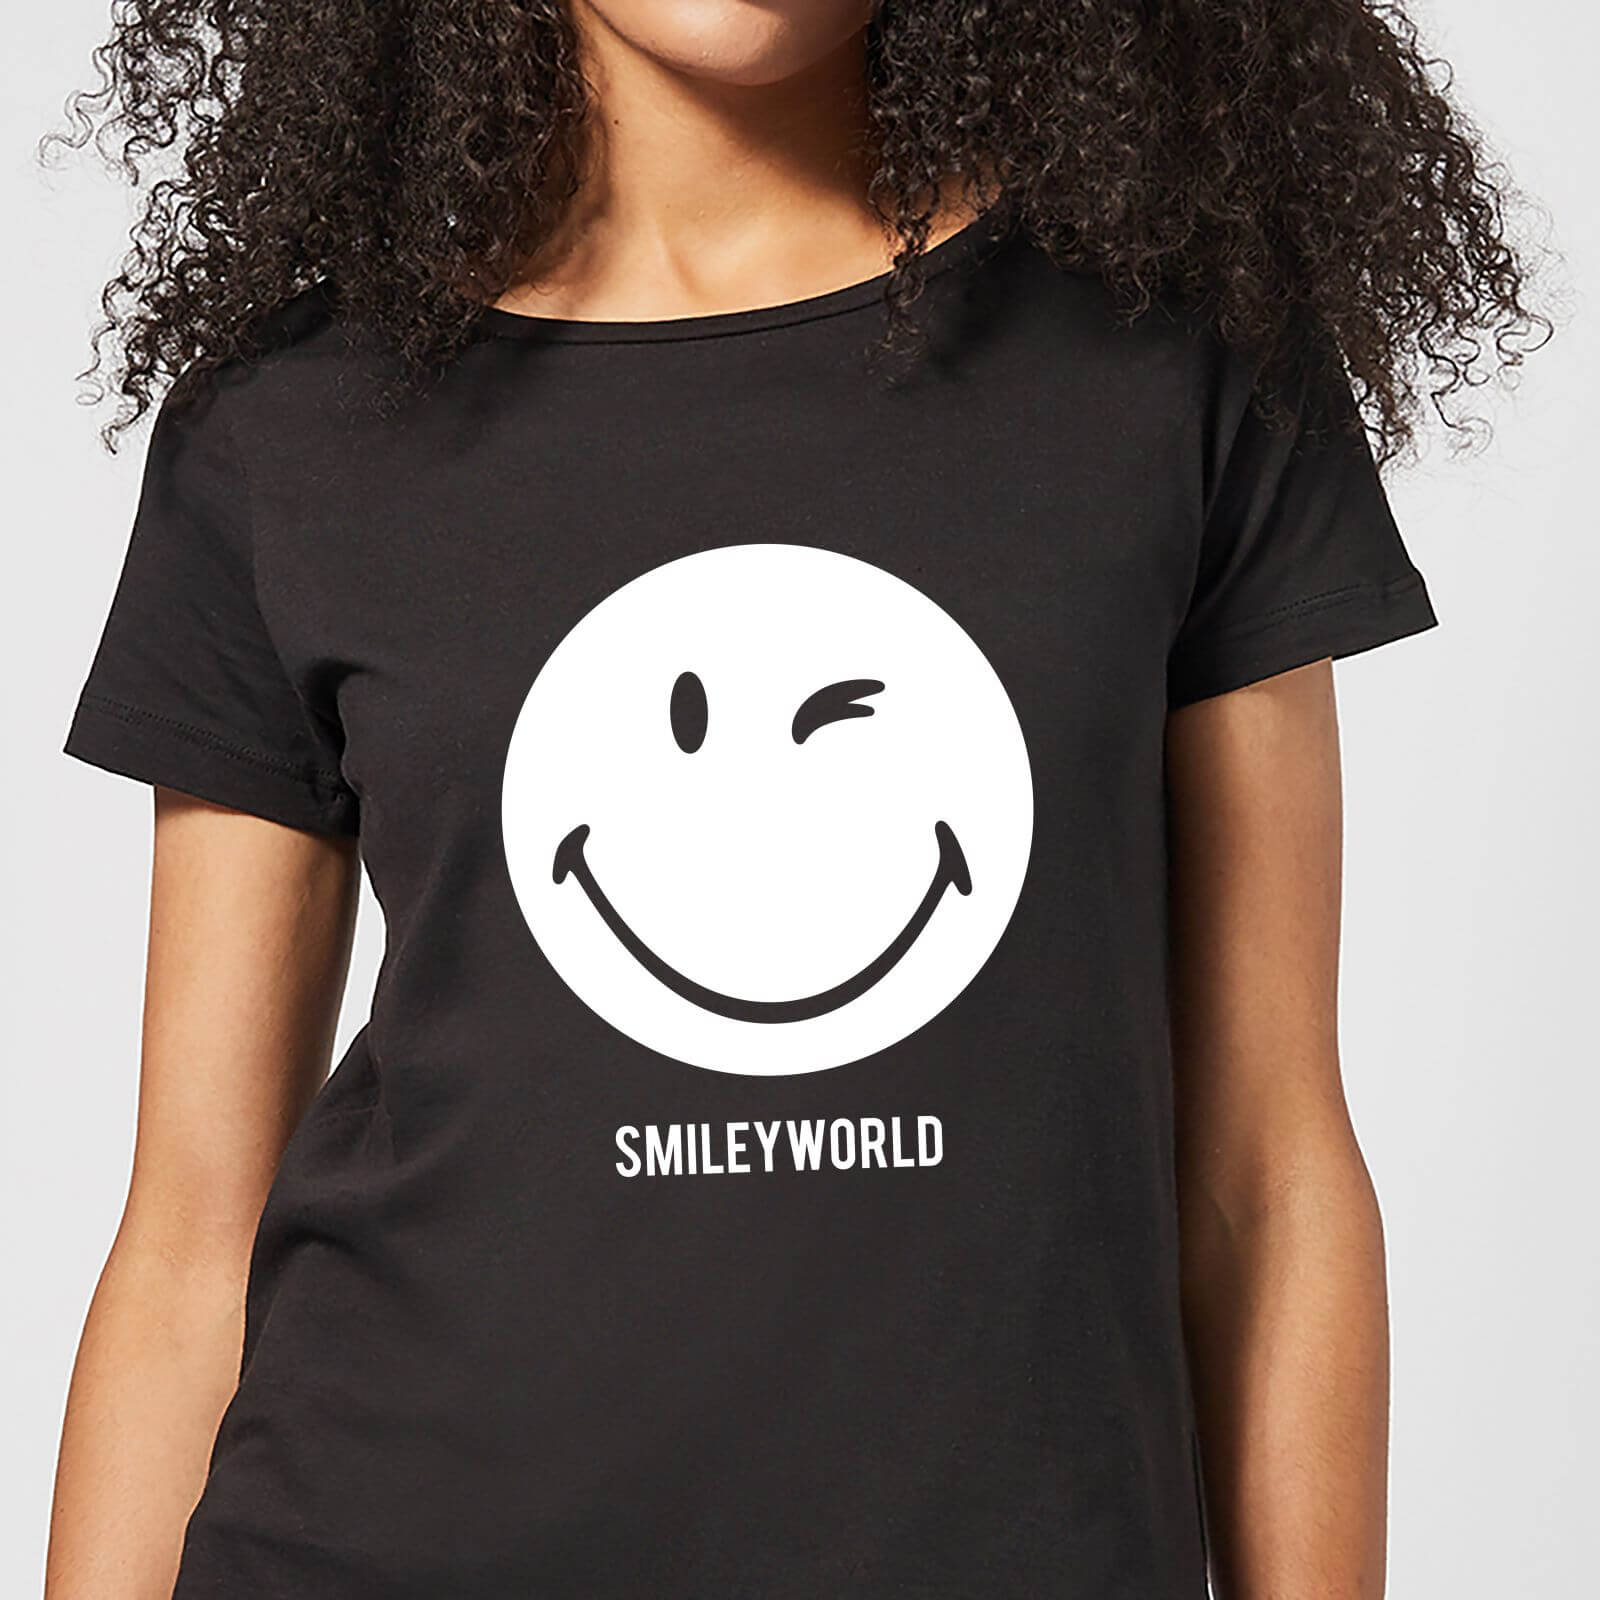 Smiley World Large Smiley Women's T-Shirt - Black - S - Black